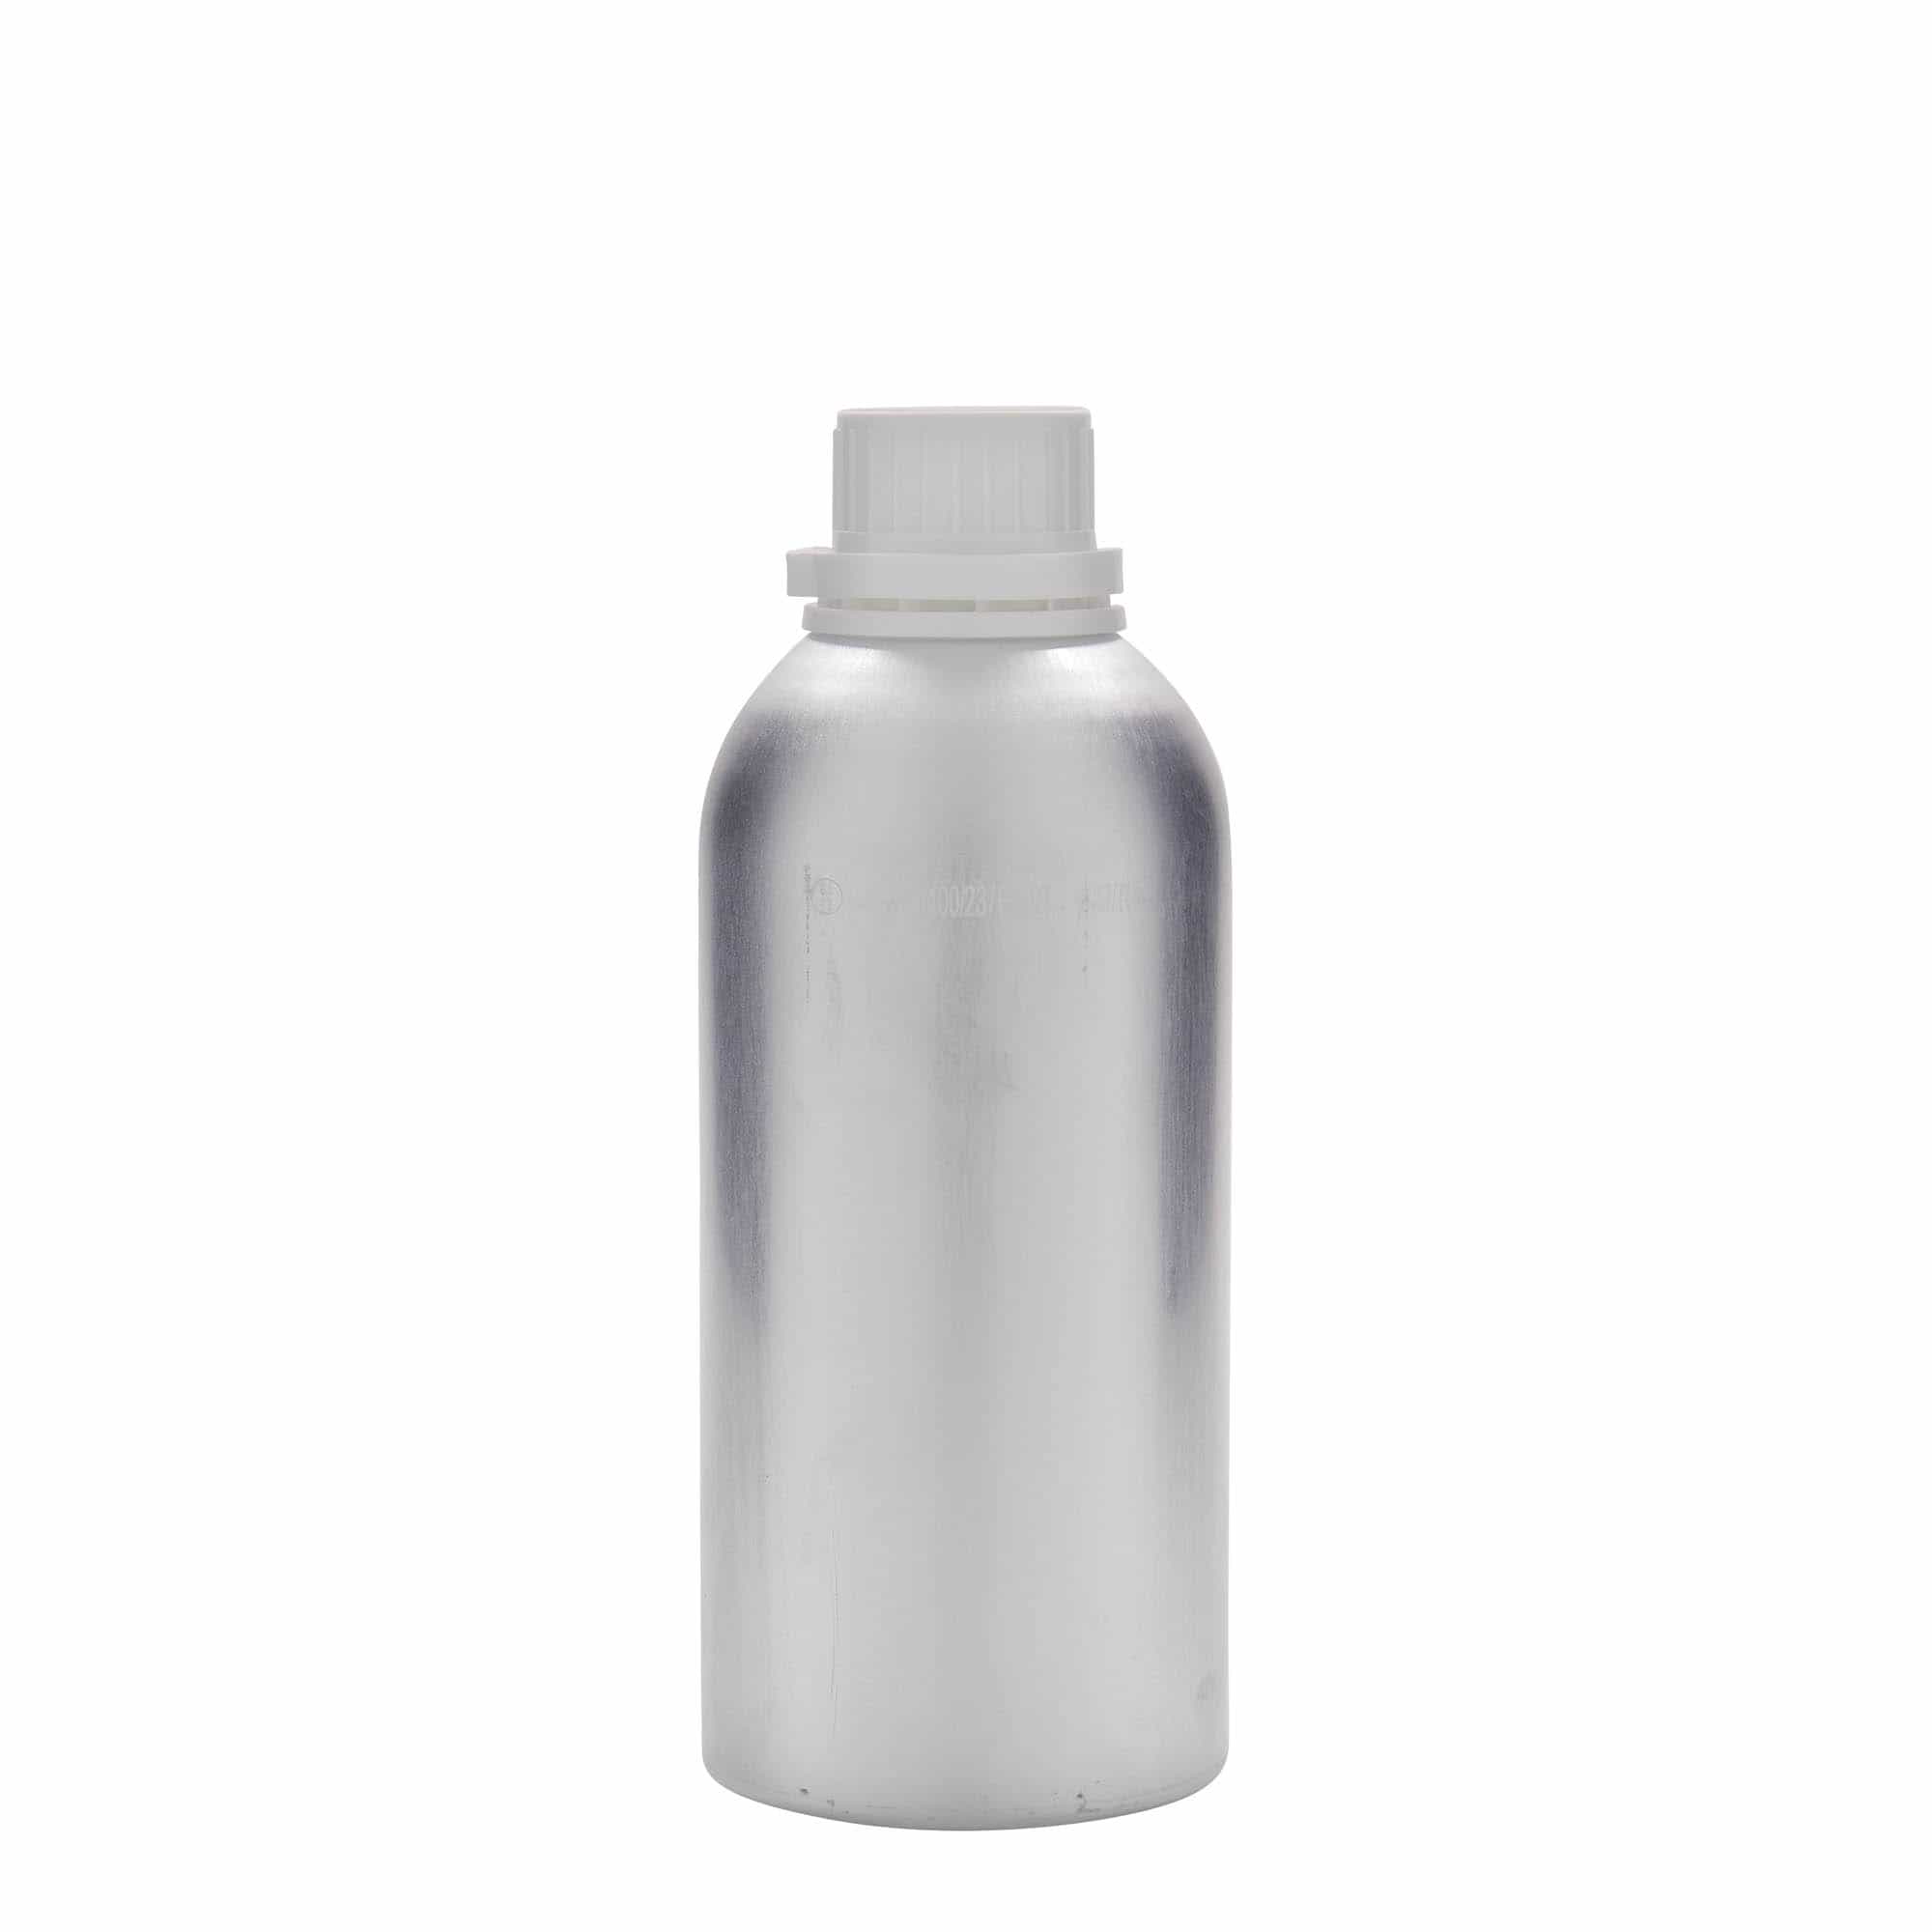 625 ml aluminium bottle, metal, silver, closure: DIN 32